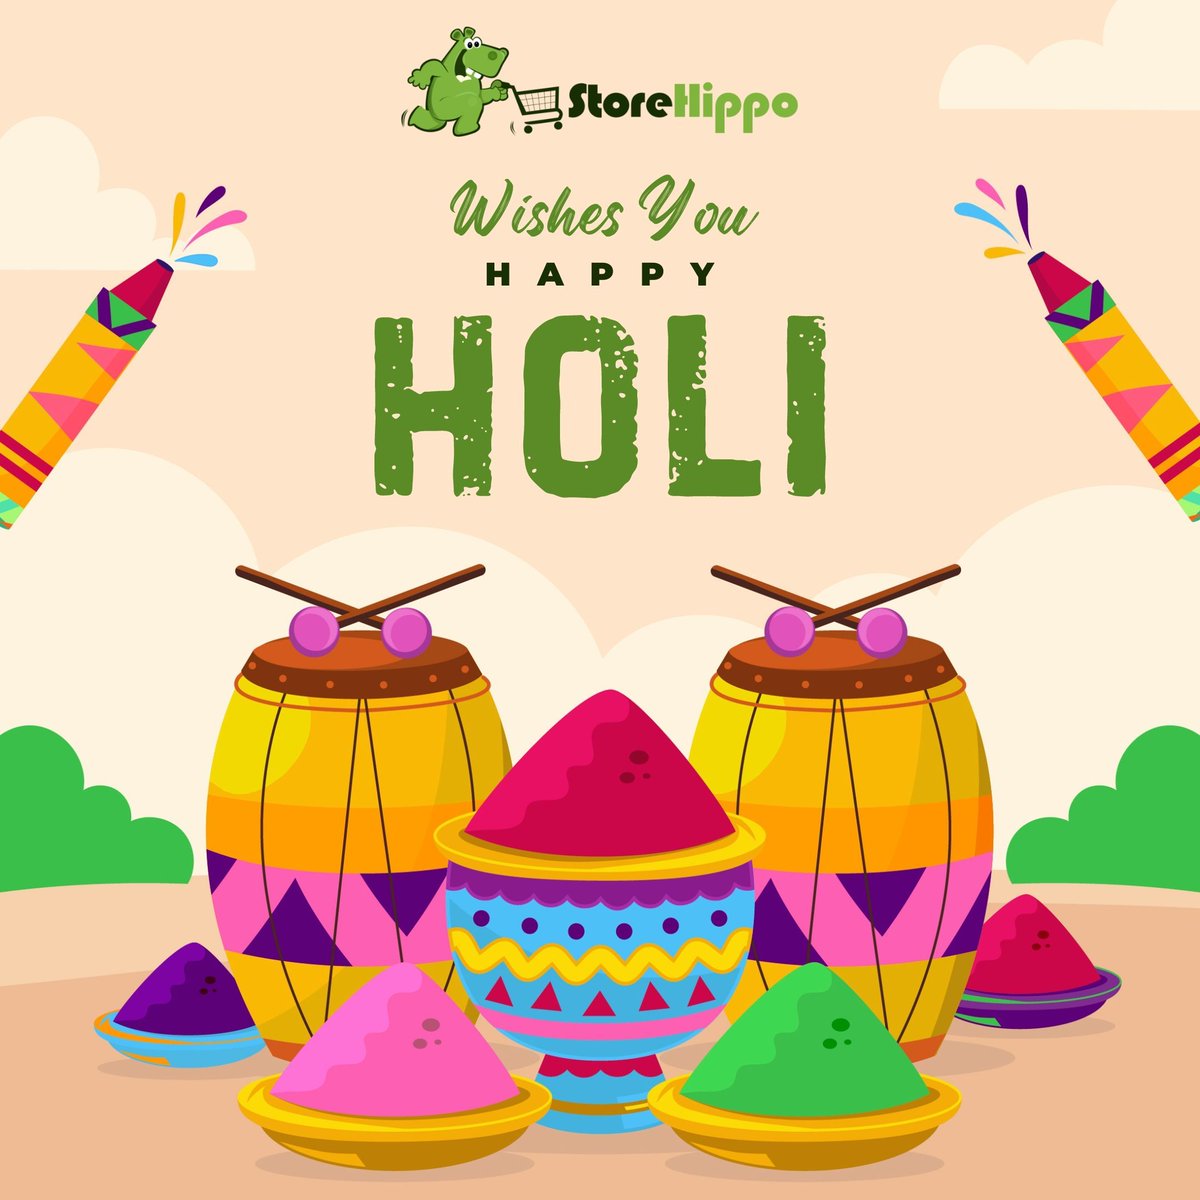 #StoreHippo wishes you a very Happy Holi 🎉